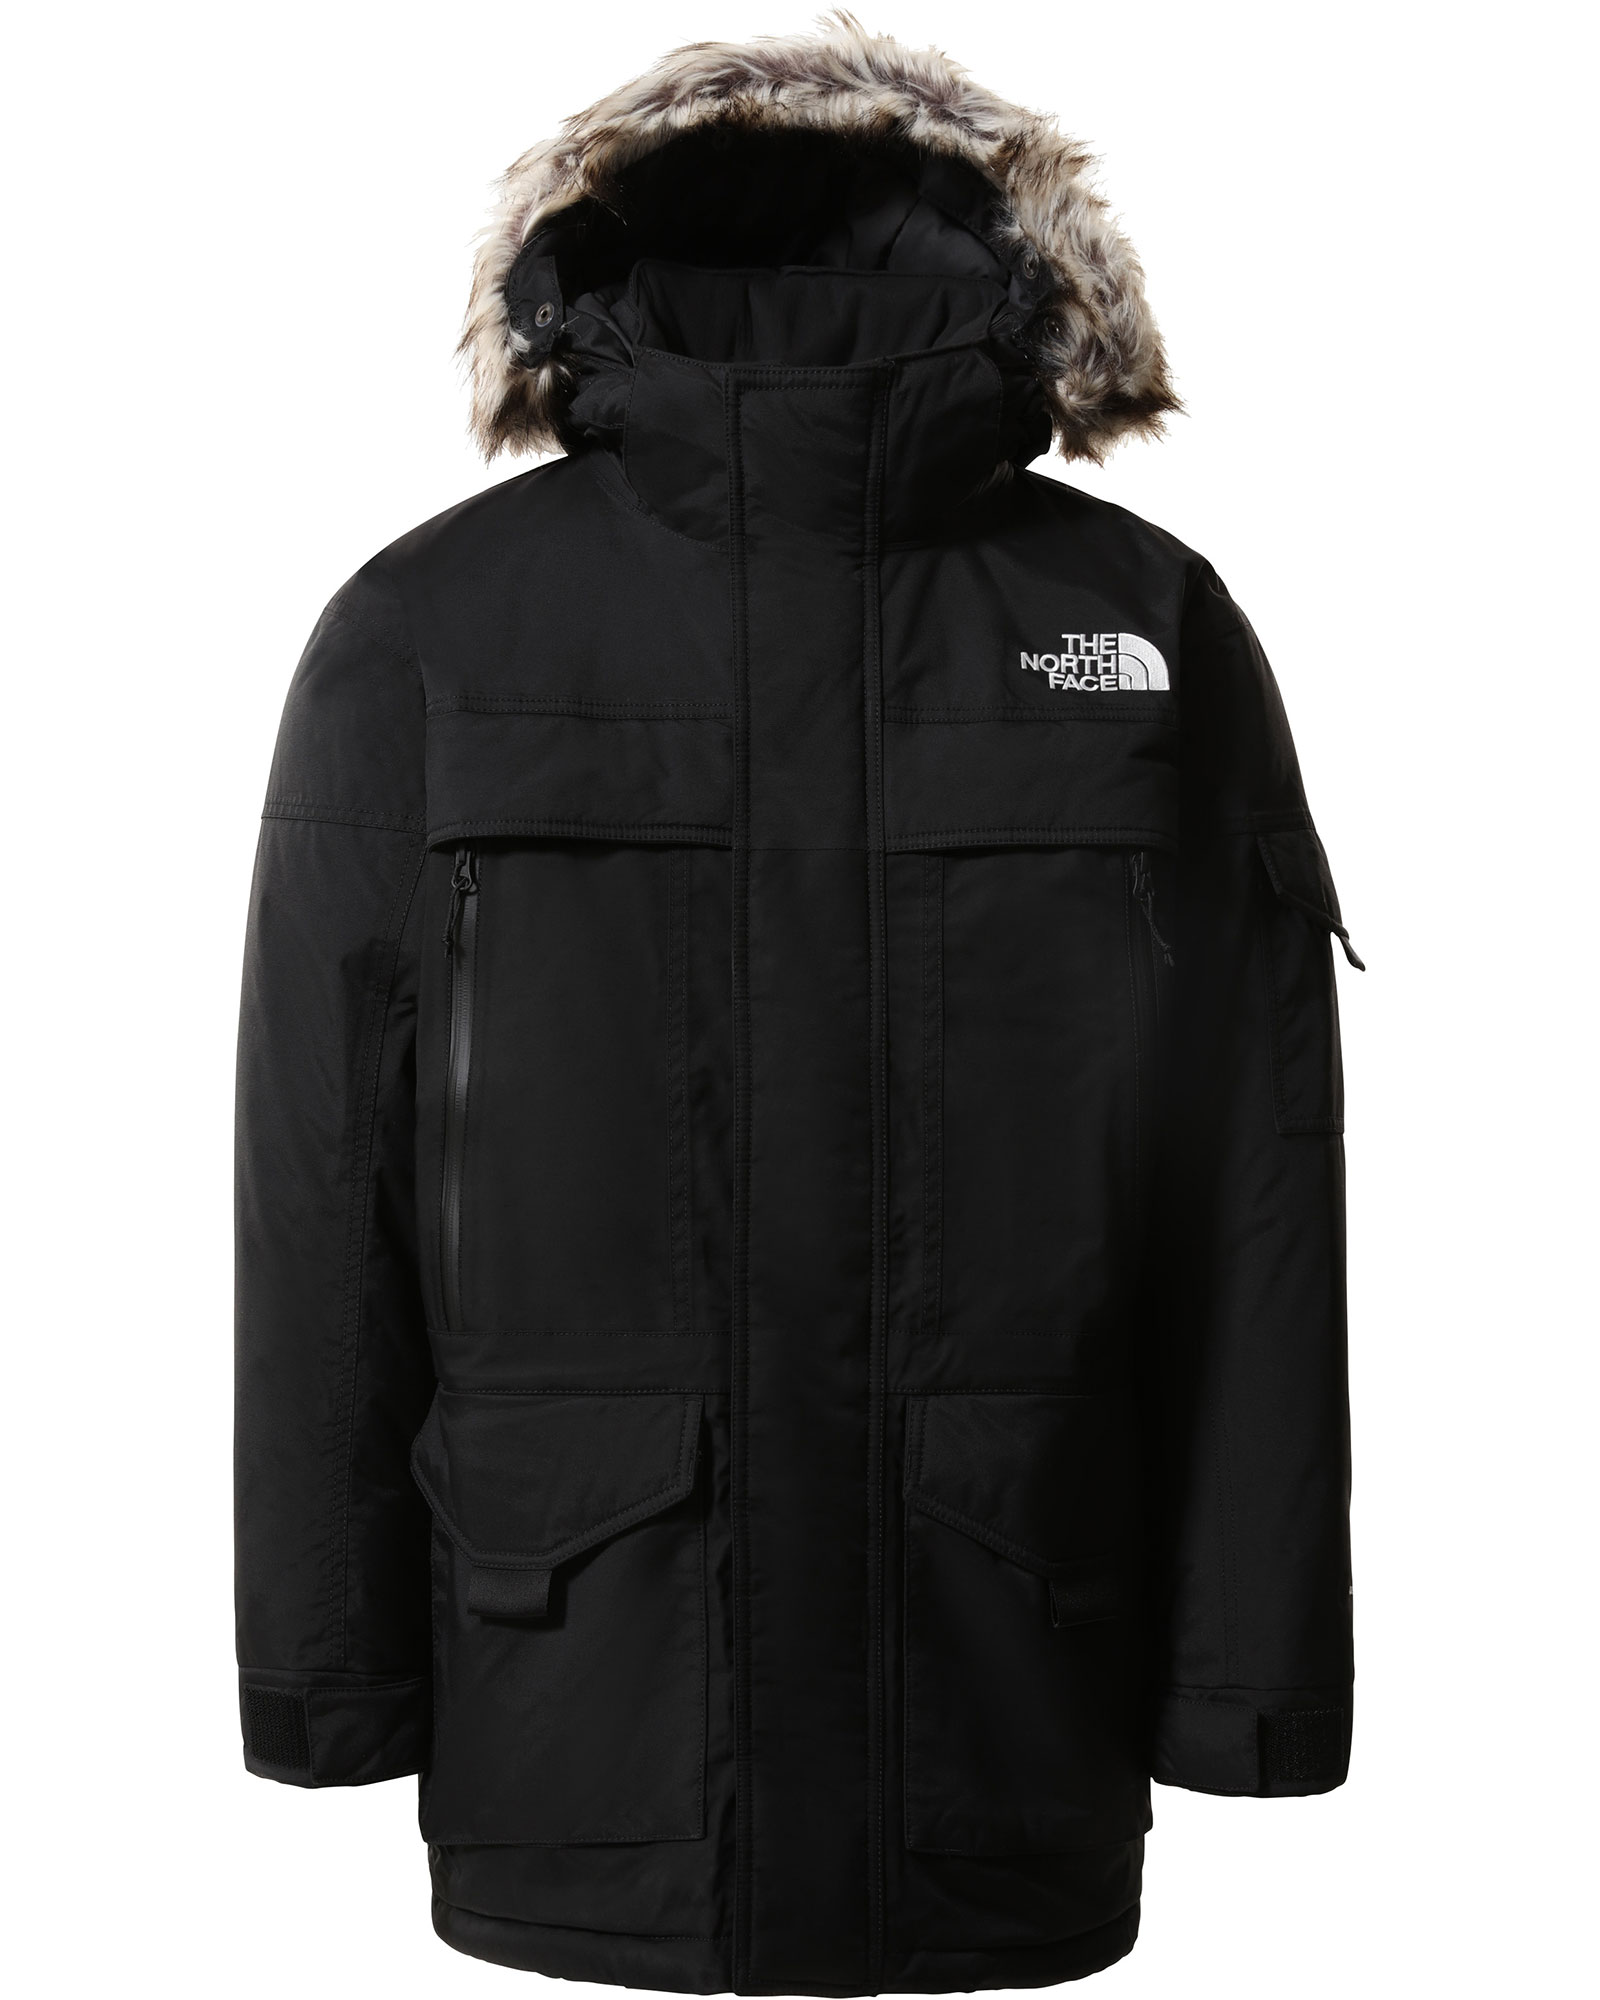 The North Face McMurdo 2 Men’s Parka Jacket - TNF Black/TNF White Logo S